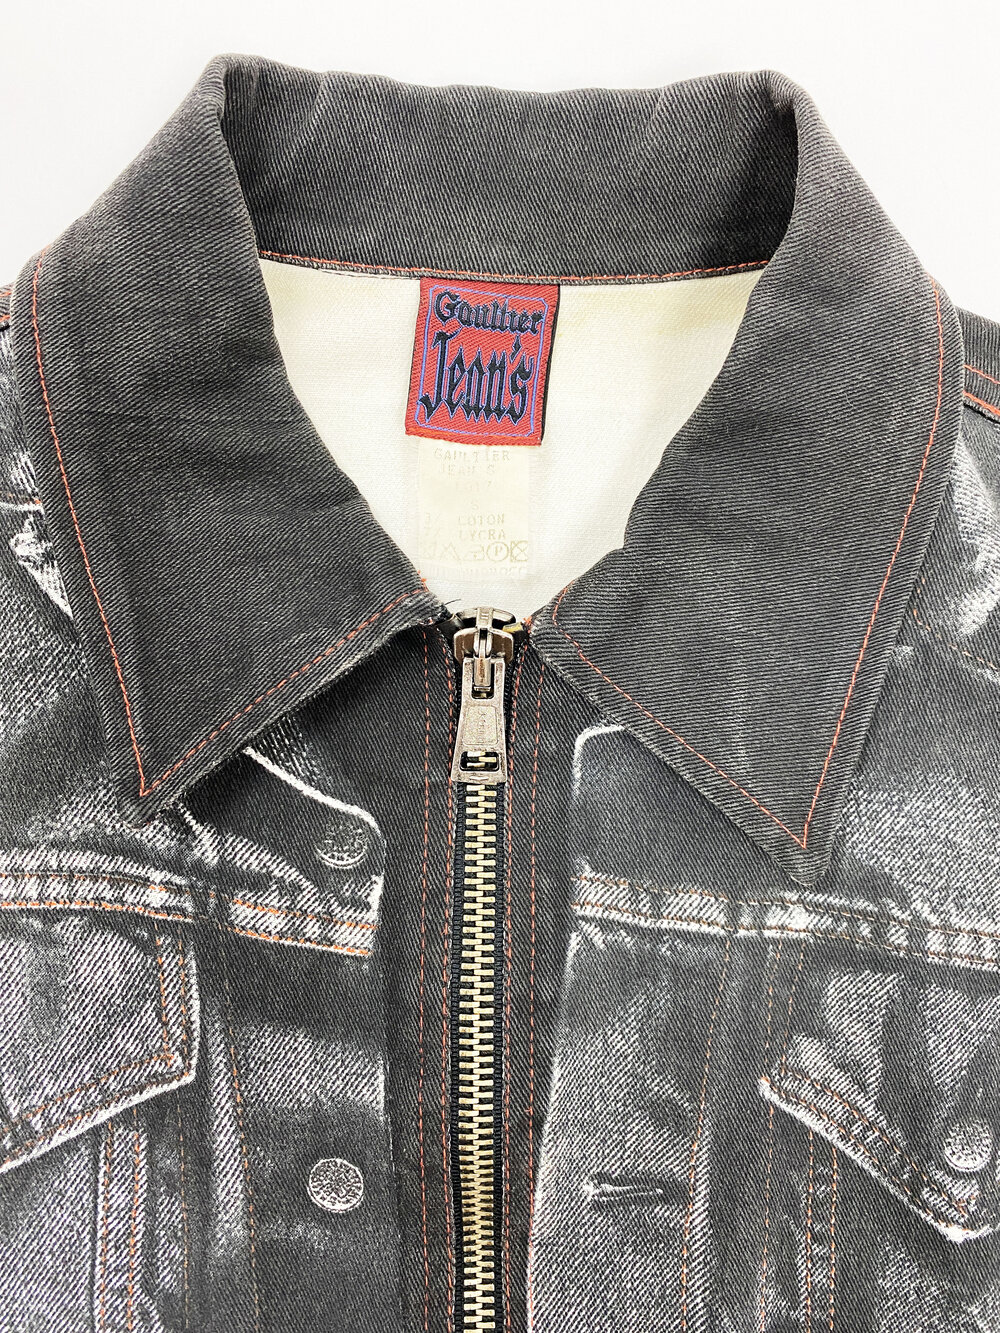 Jean Paul Gaultier trompe l'oeil jeans print jacket — JAMES VELORIA